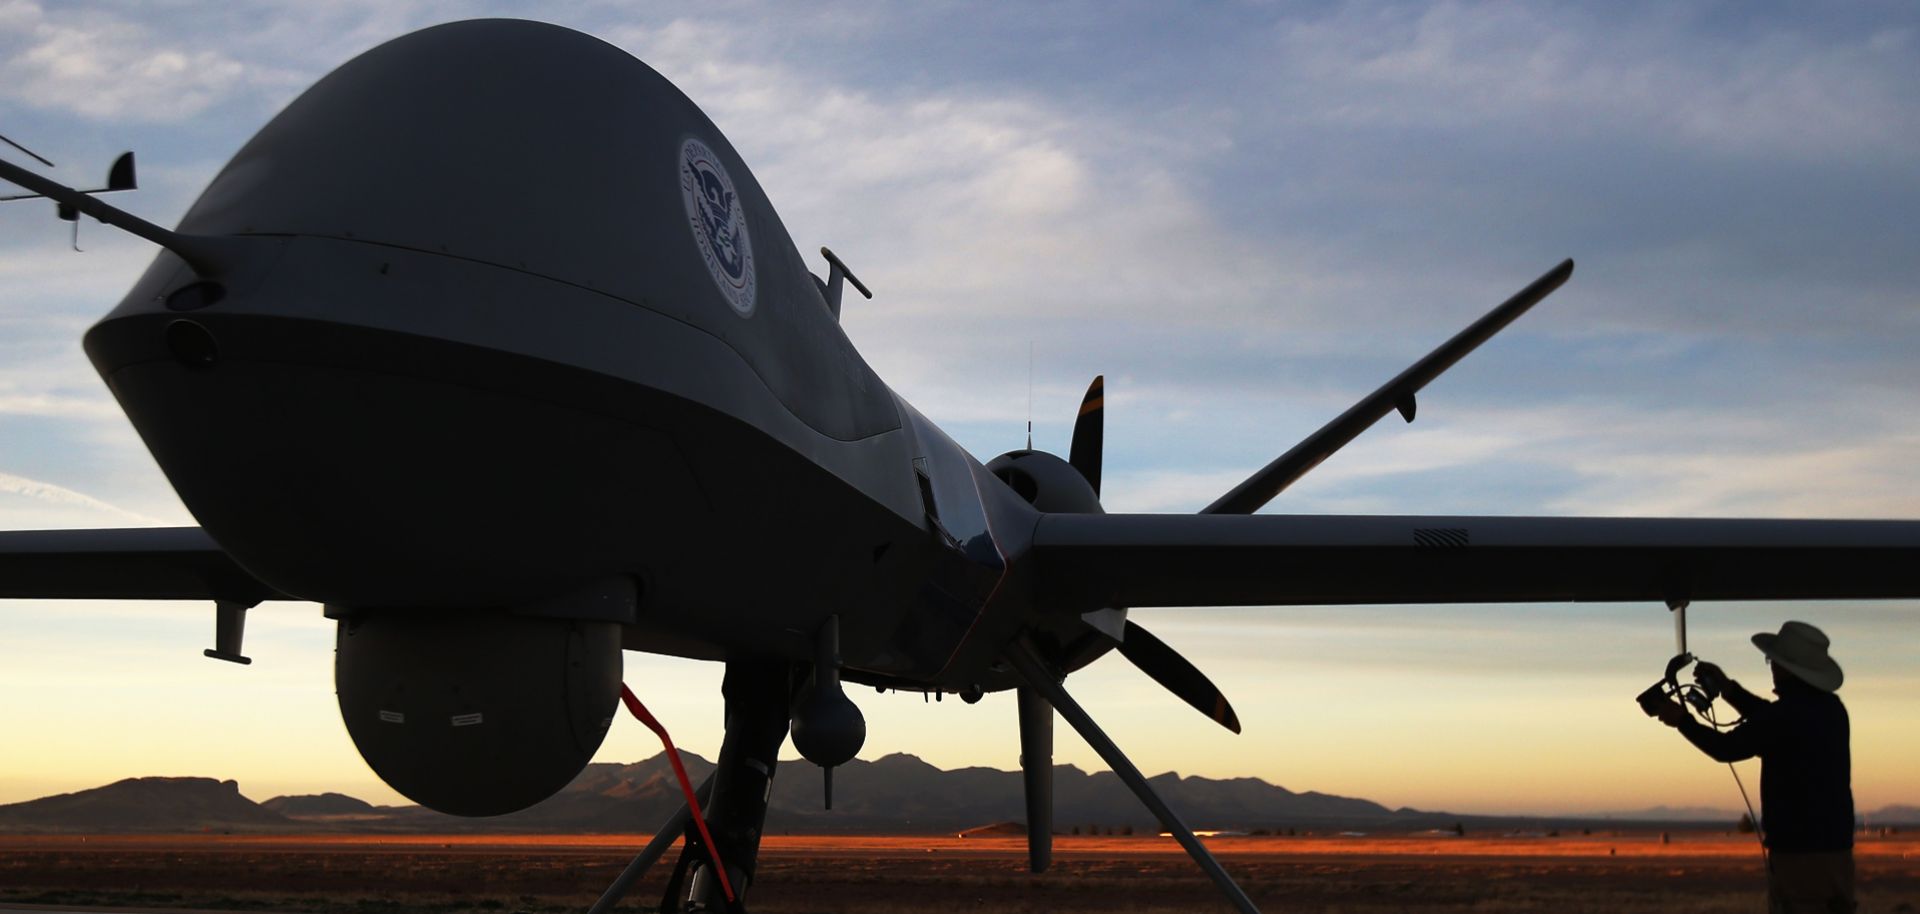 U.S. maintenance personnel check a Predator drone before a surveillance flight near the Mexican border.